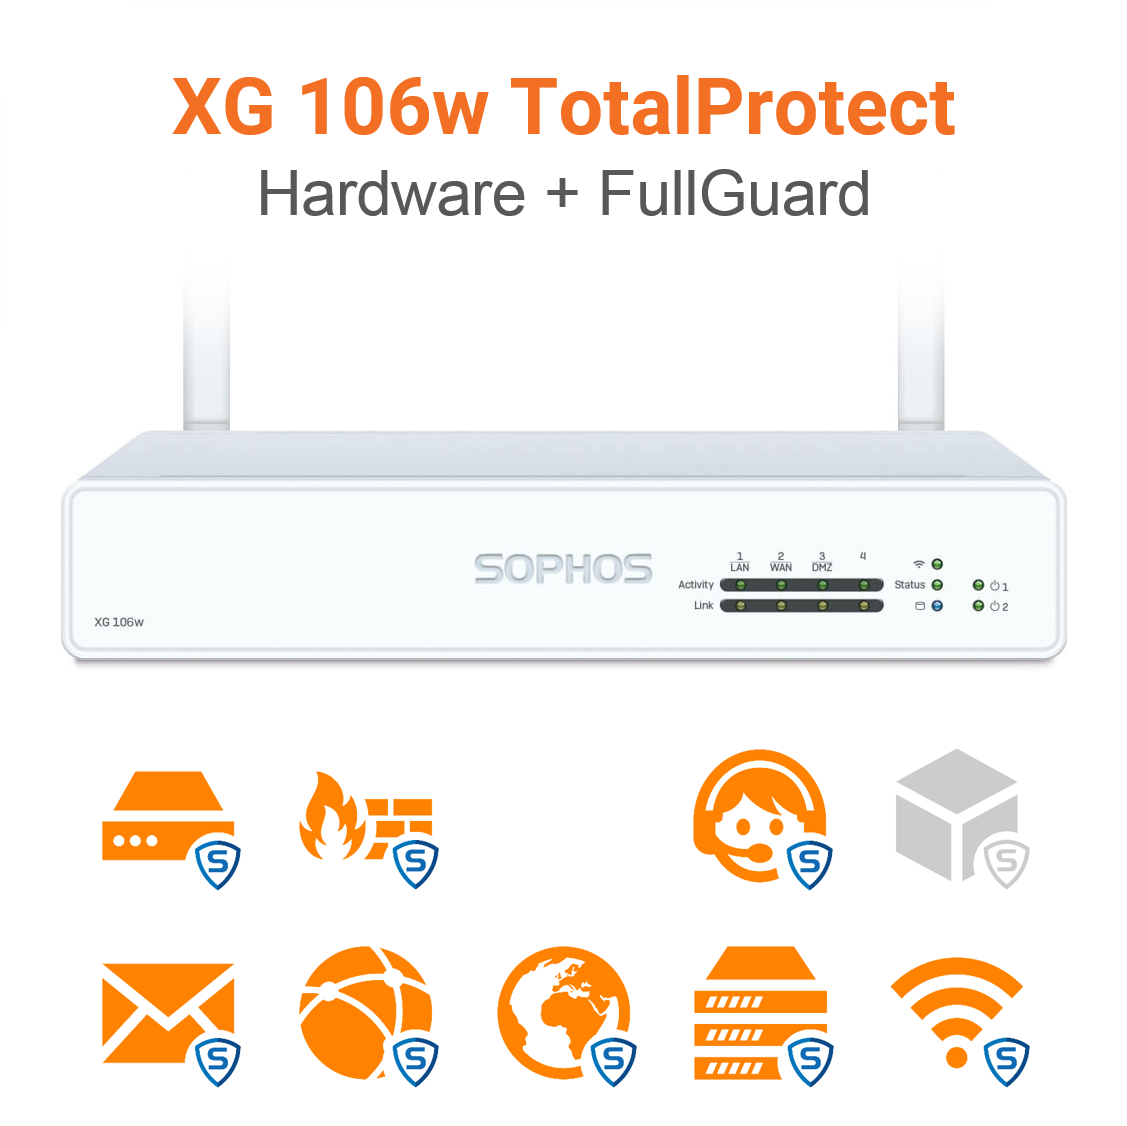 Sophos XG 106w TotalProtect Bundle (Hardware + Lizenz) (End of Sale/Life)